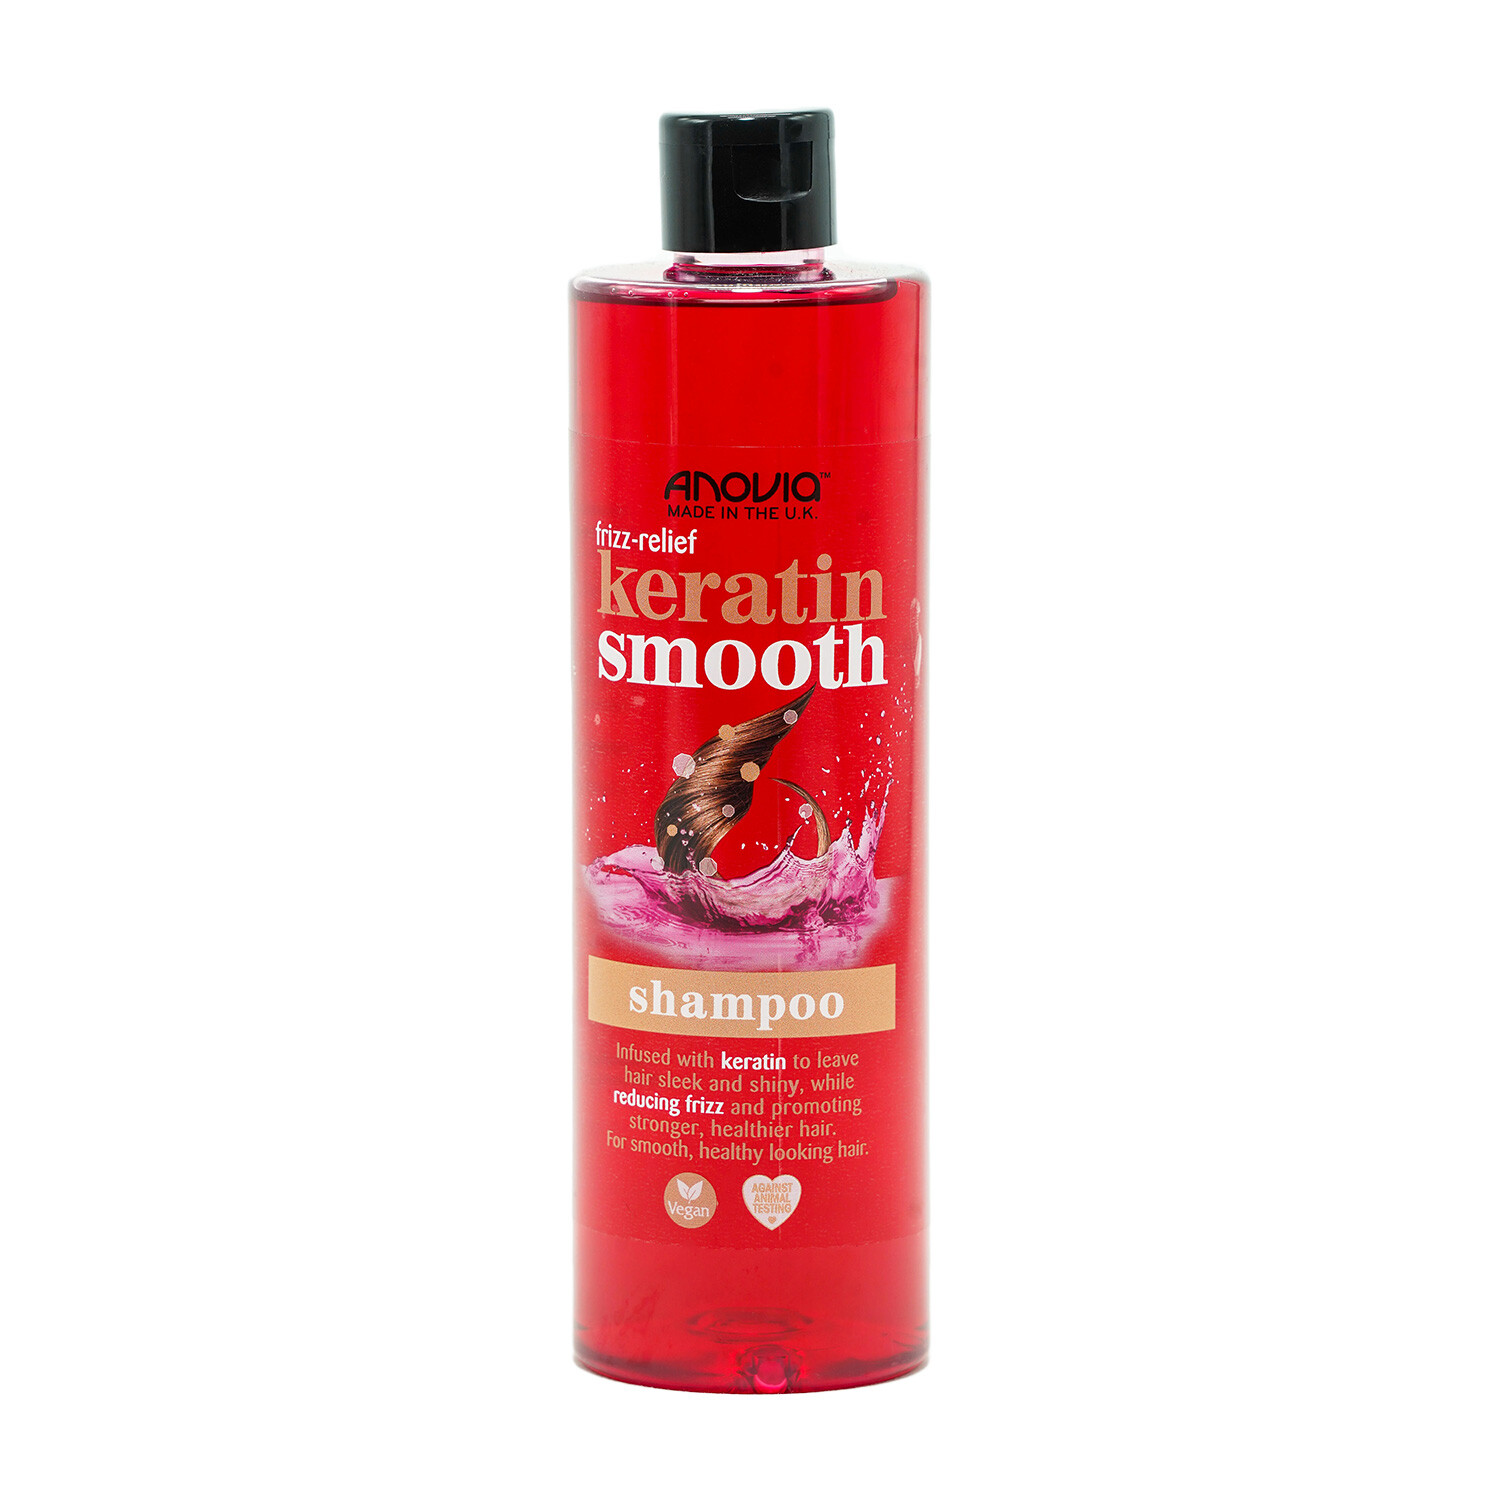 Anovia Frizz-Relief Keratin Smooth Shampoo - Red Image